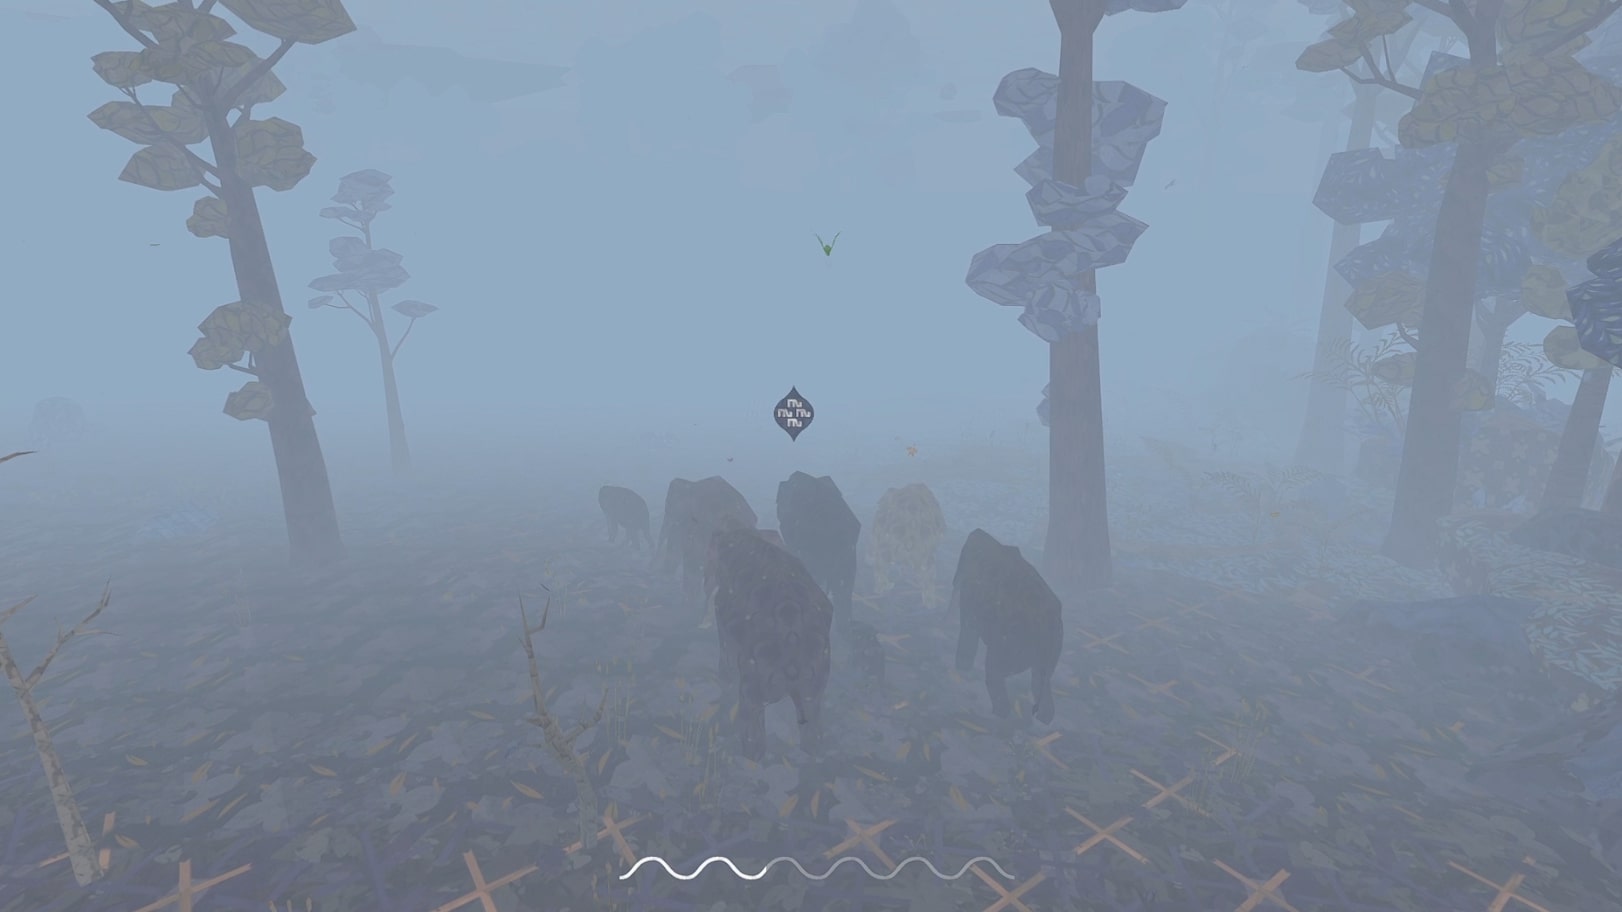 The elephant herd walking through a misty area